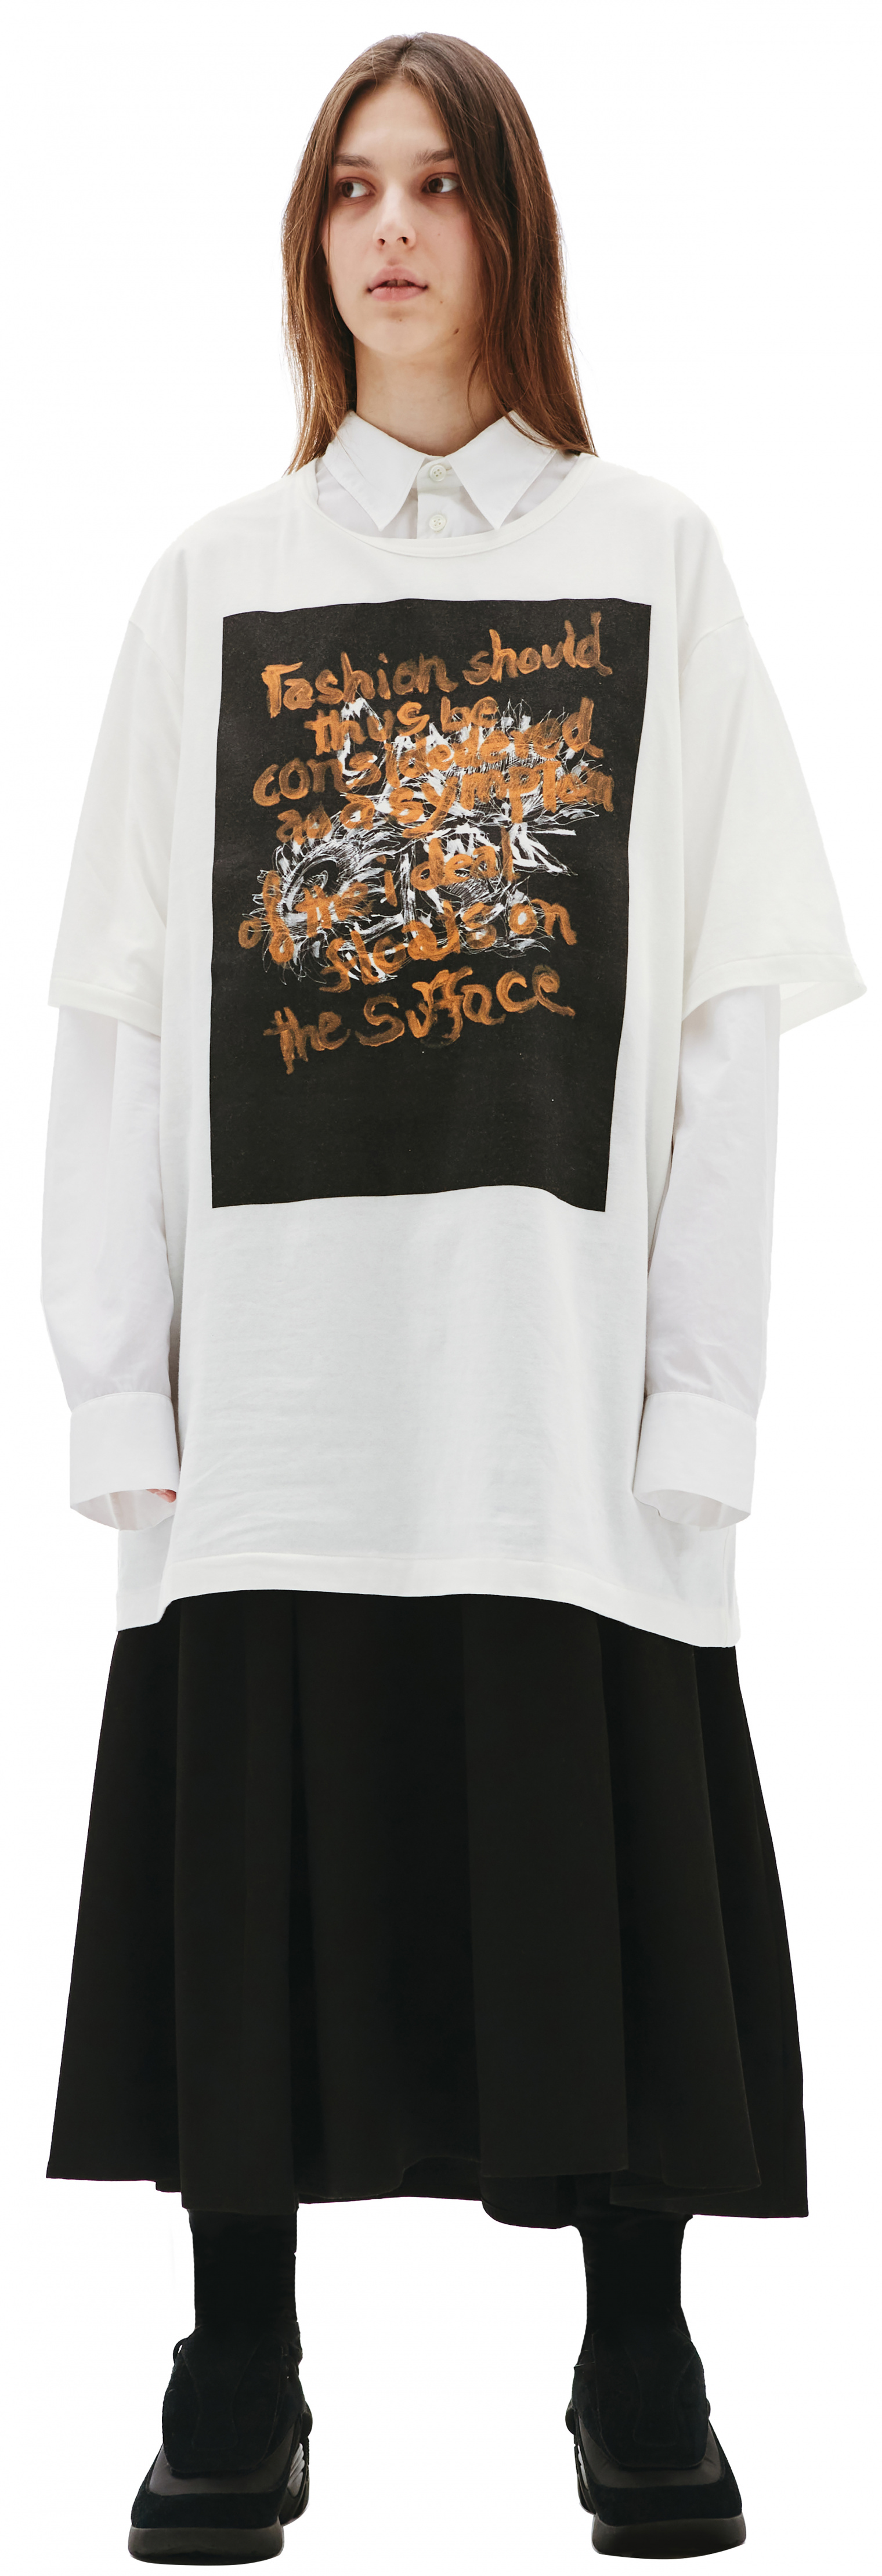 Yohji Yamamoto White Cotton T-shirt